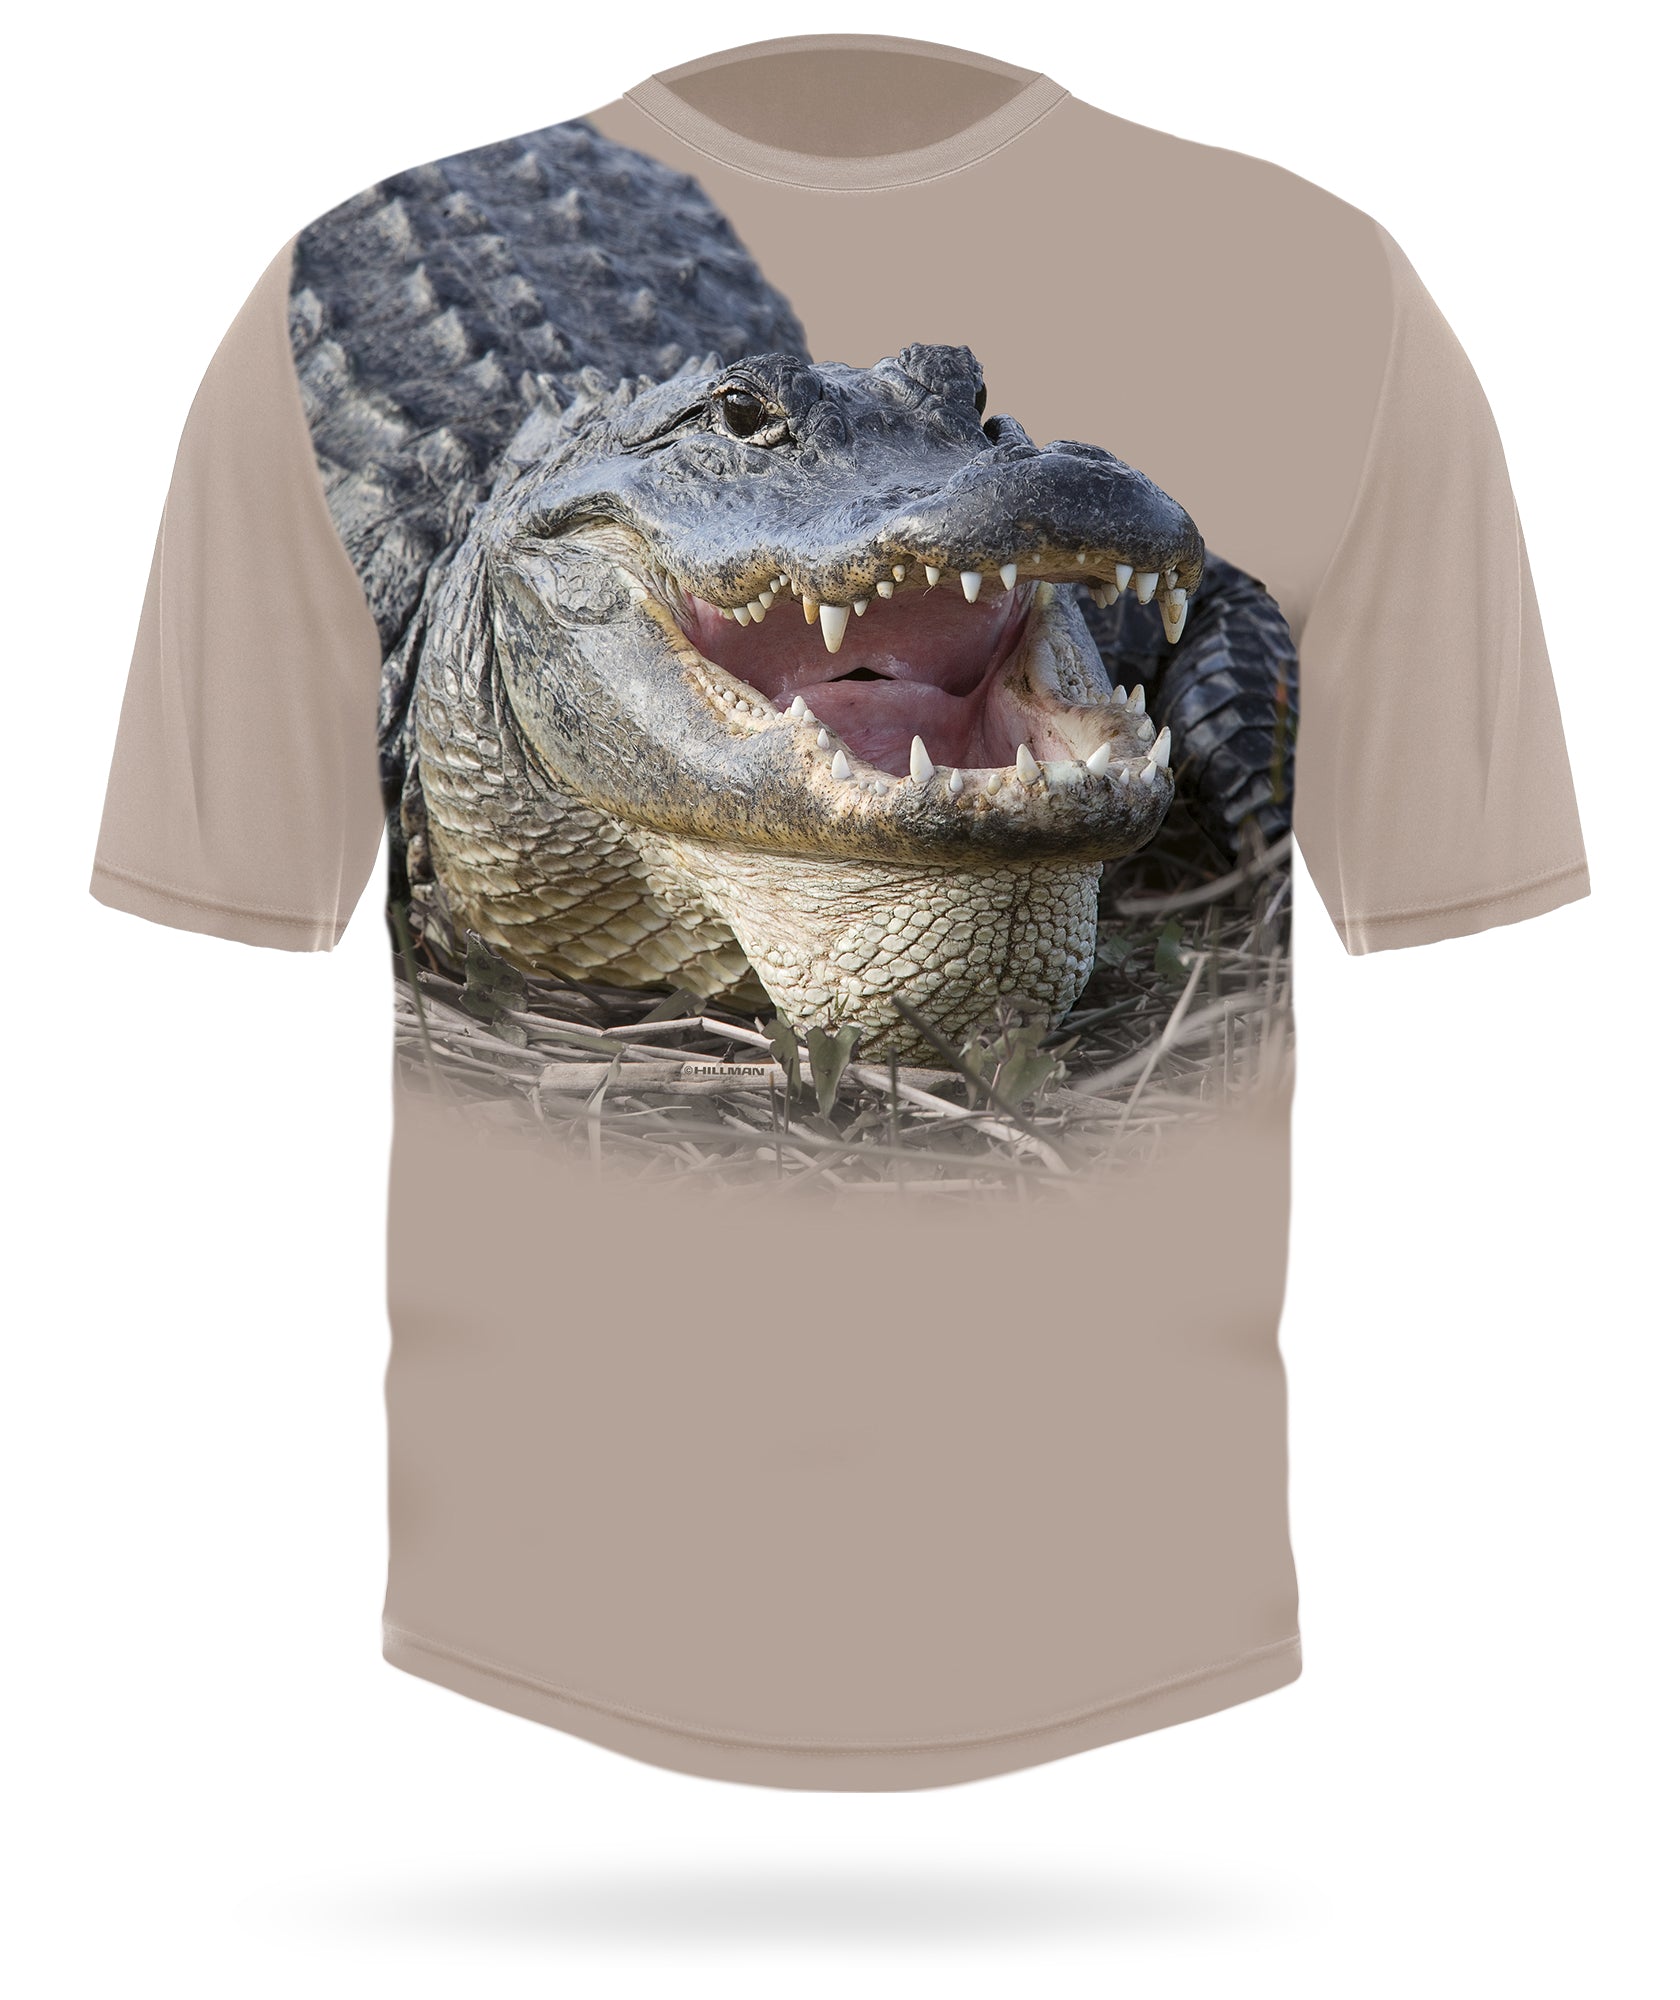 Short sleeve Alligator